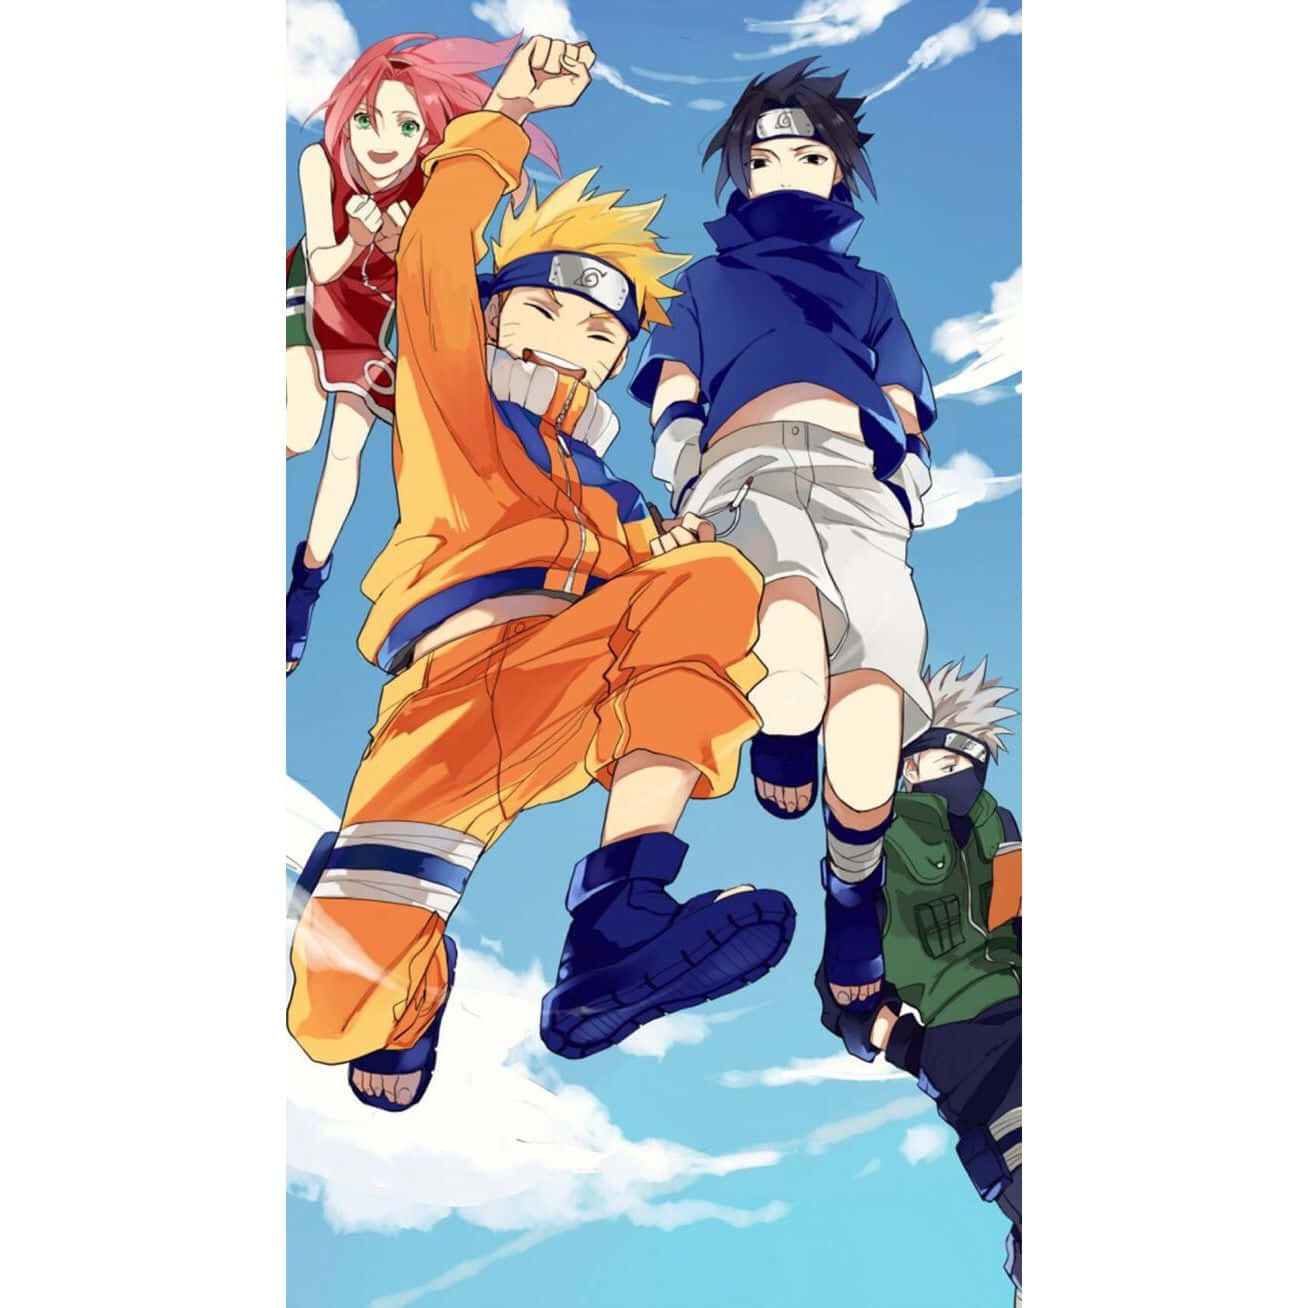 Dreigenerationen Von Ninja - Team 7 Vereint, Kakashi Hatake, Naruto Uzamaki Und Sasuke Uchiha. Wallpaper